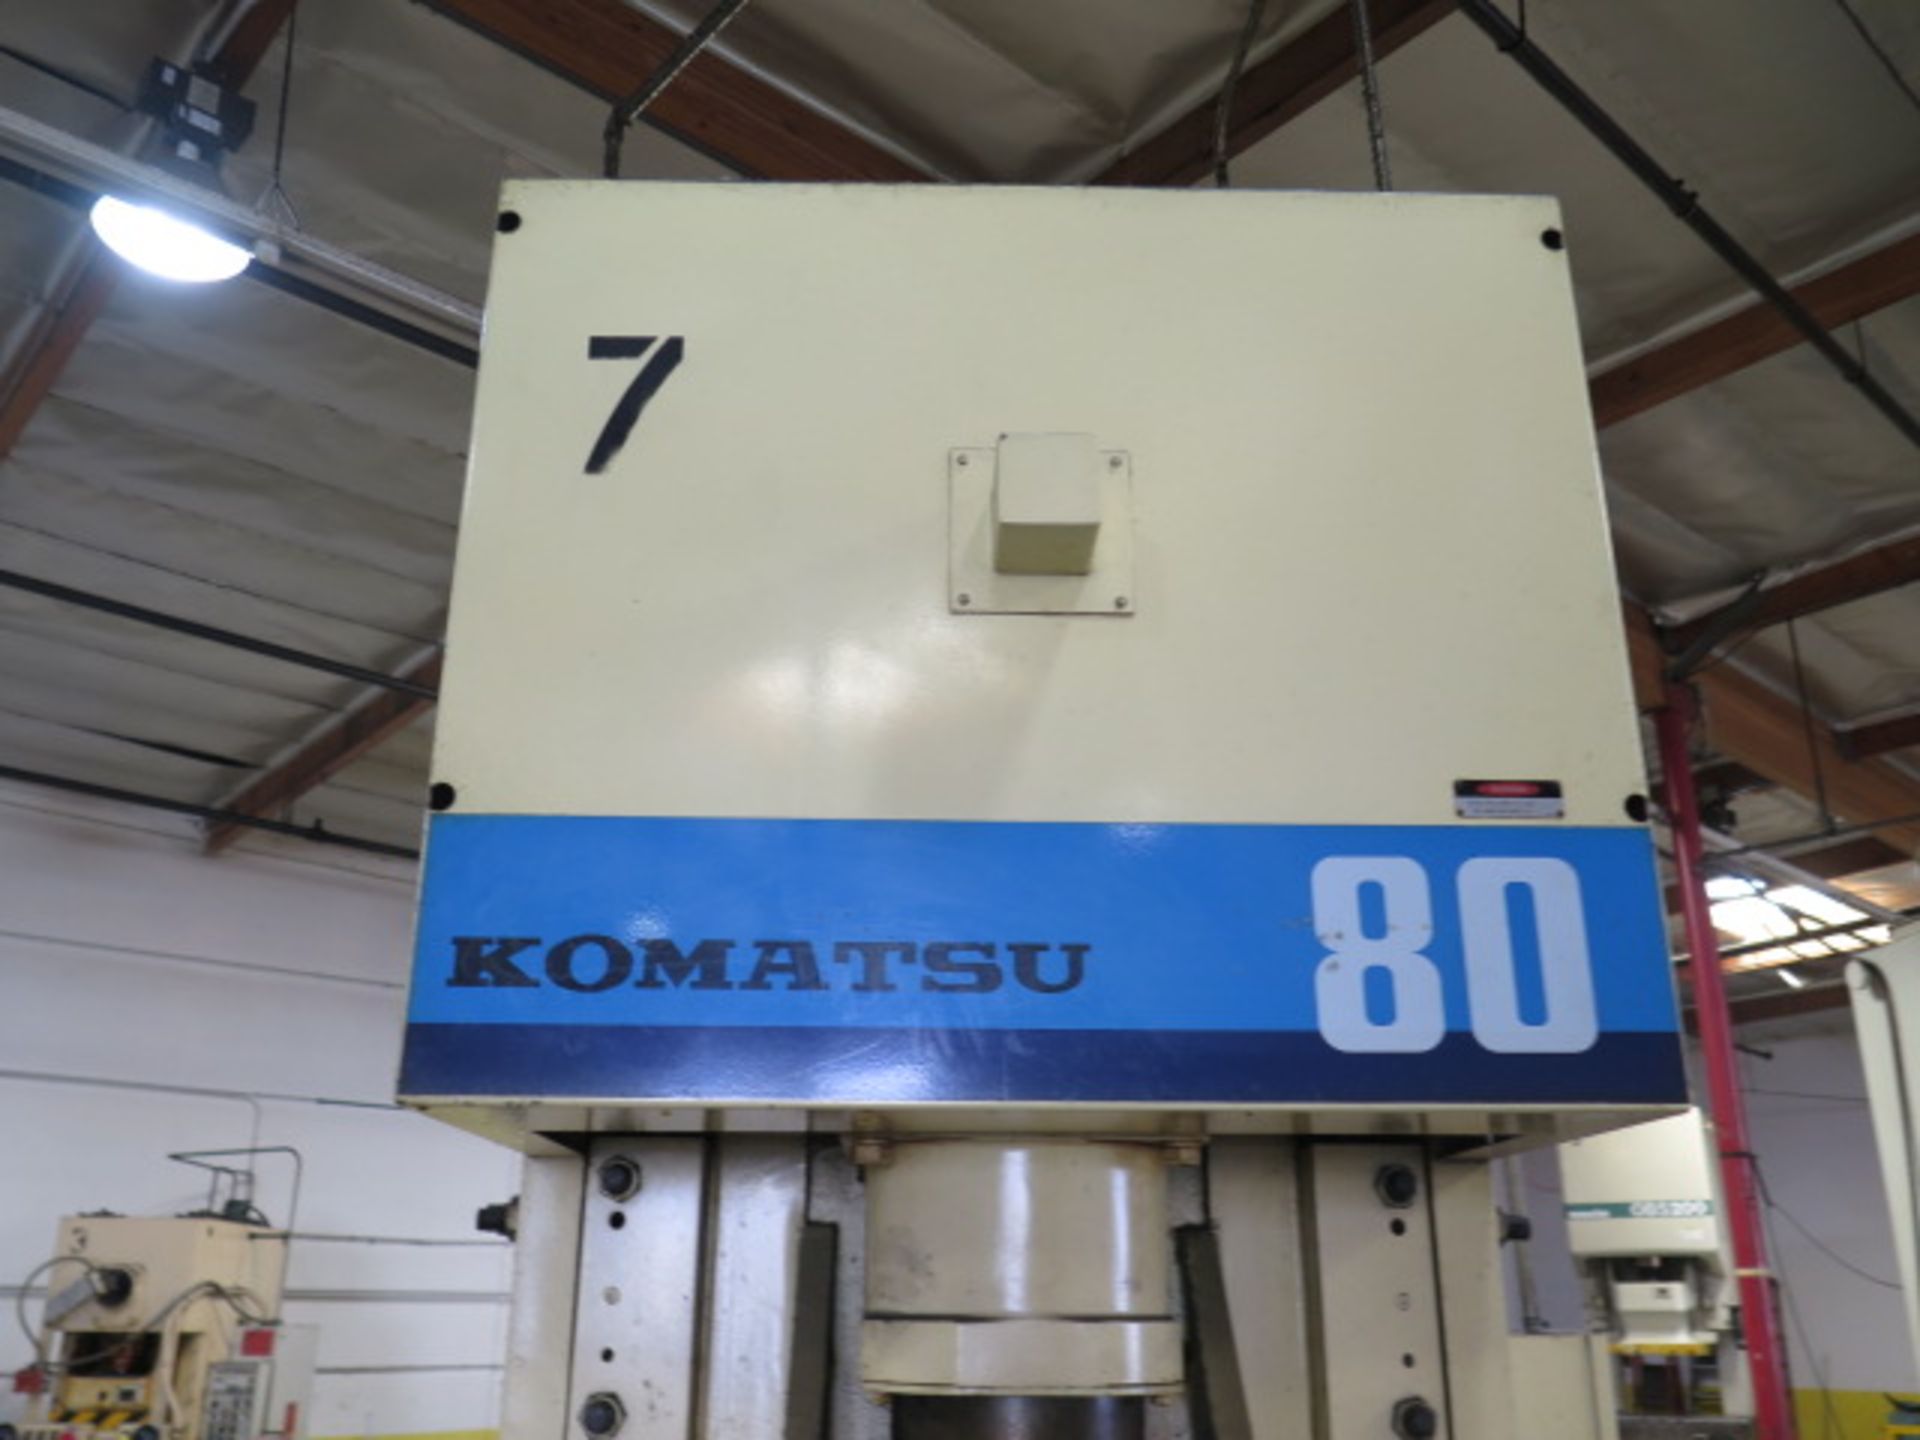 Komatsu OBS 80-3 80 Ton Gap Frame Press s/n 12024 w/ Controls, 37-75 SPM, 5.12” Stroke, SOLD AS IS - Image 4 of 20